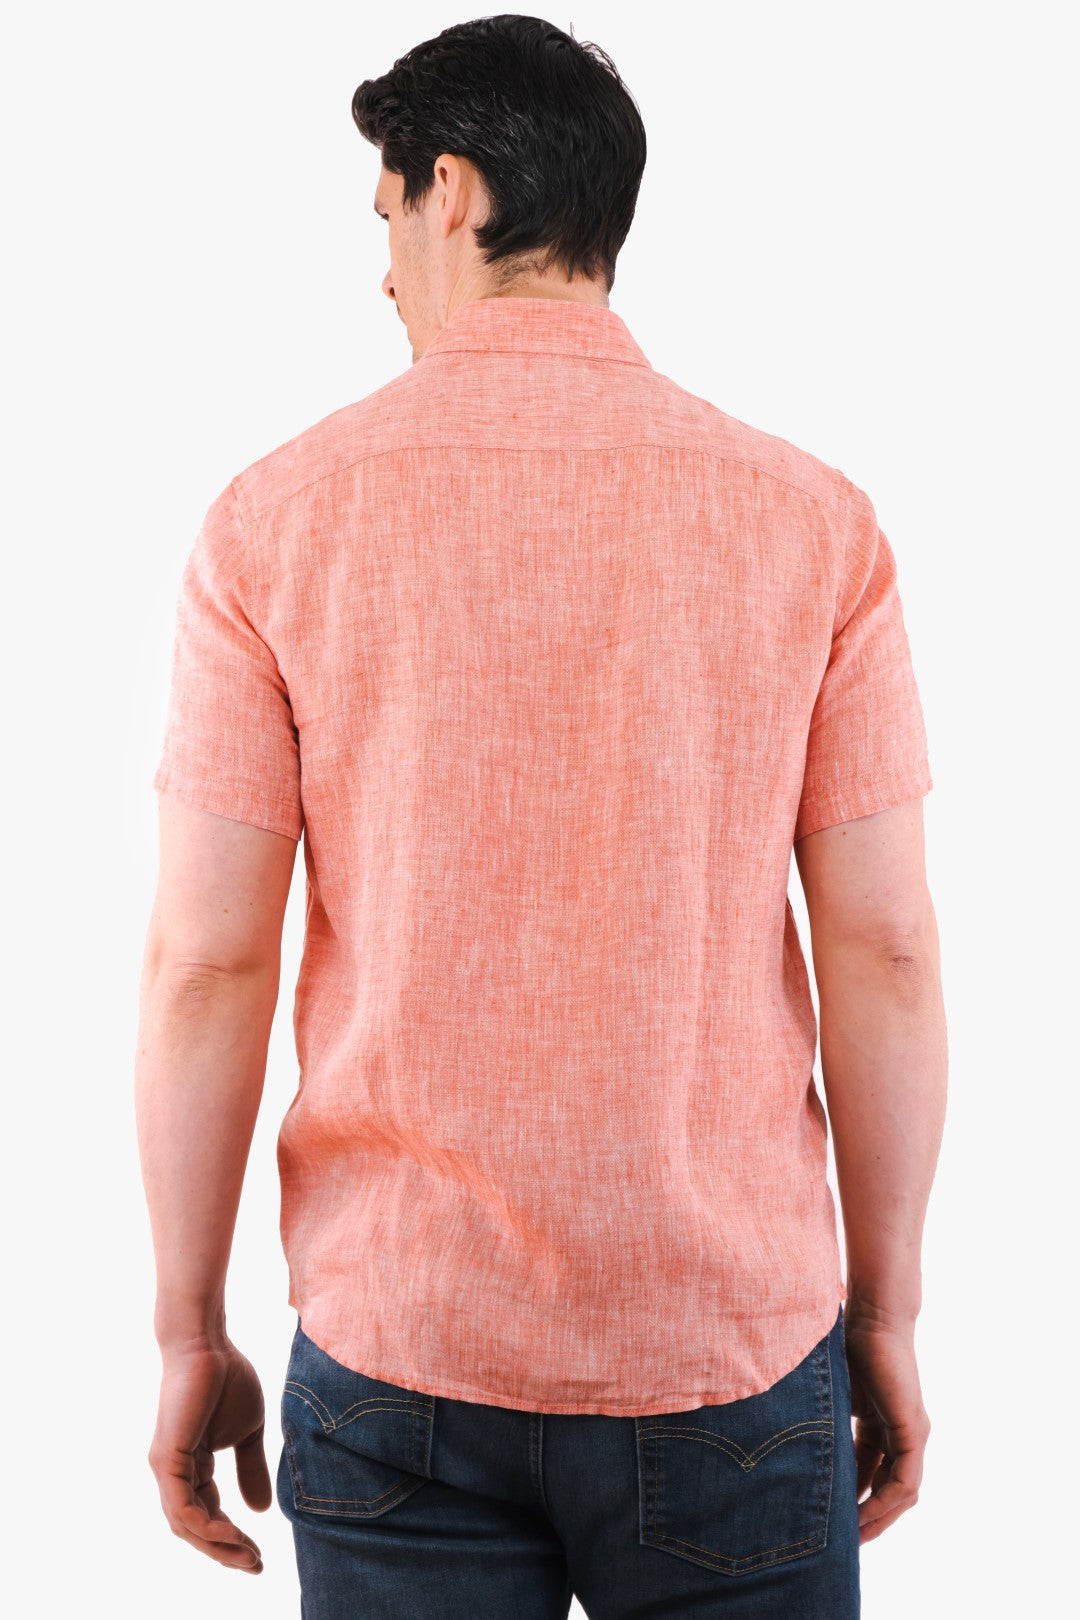 Michael Kors Short Sleeve Linen Shirt in Orange color